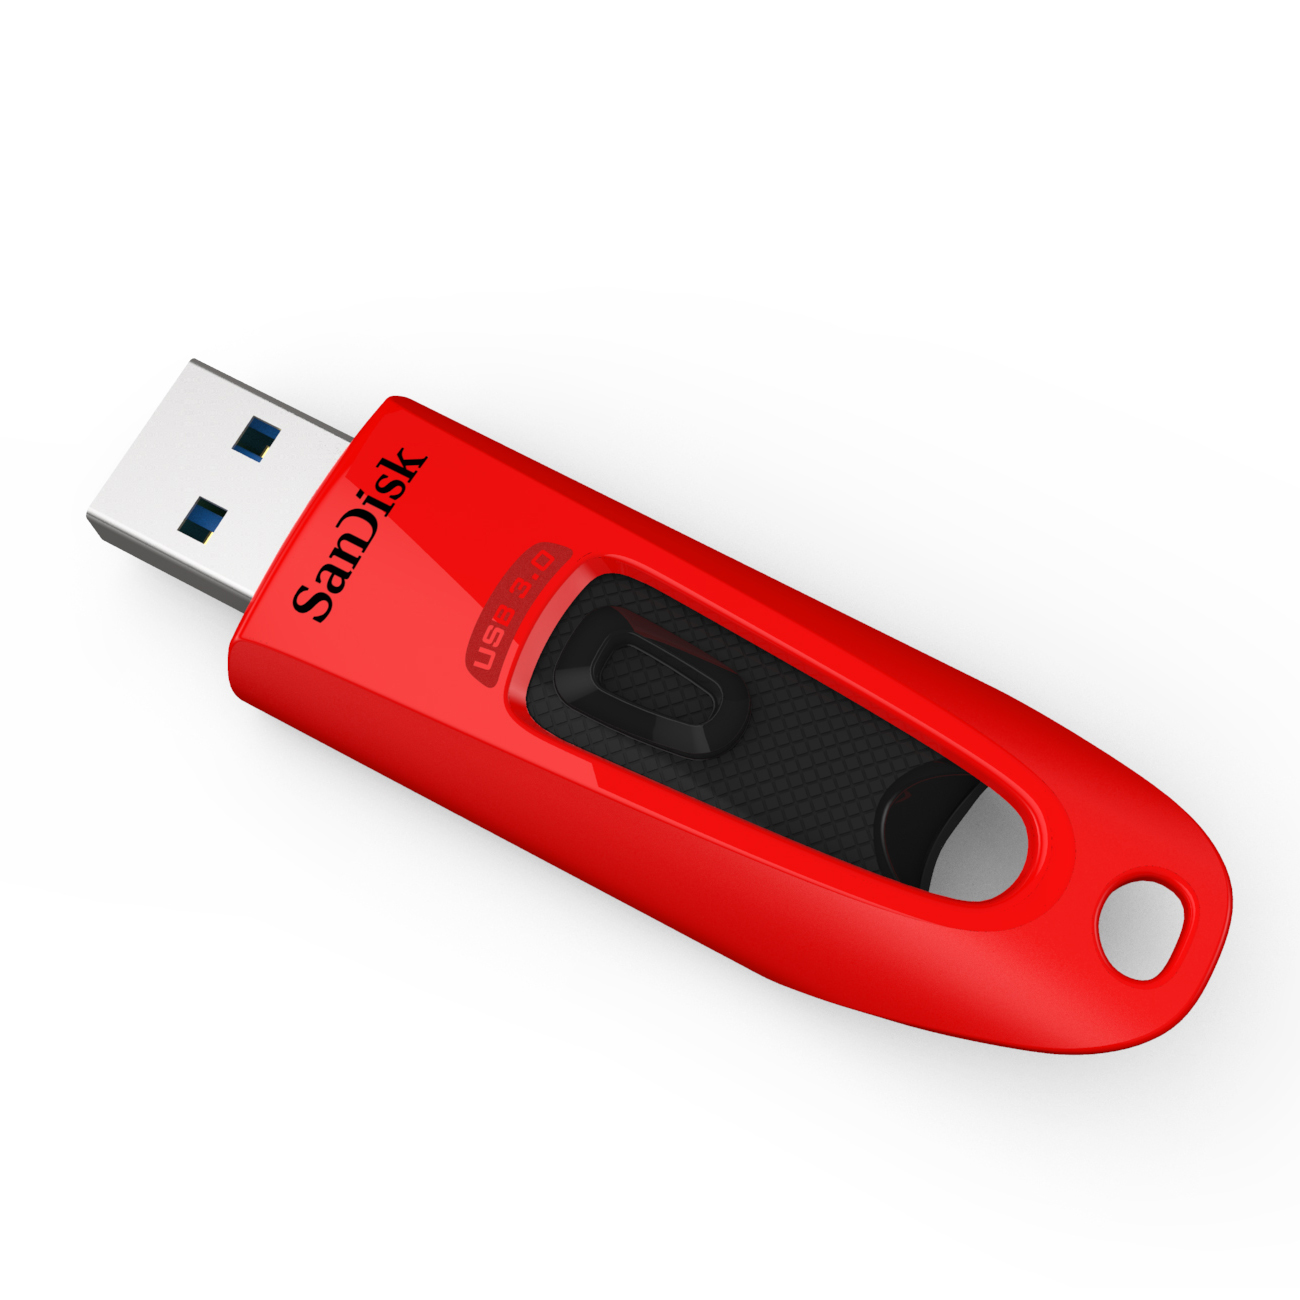 SanDisk Ultra Clé USB 3.0 32 Go Rouge pas cher - HardWare.fr